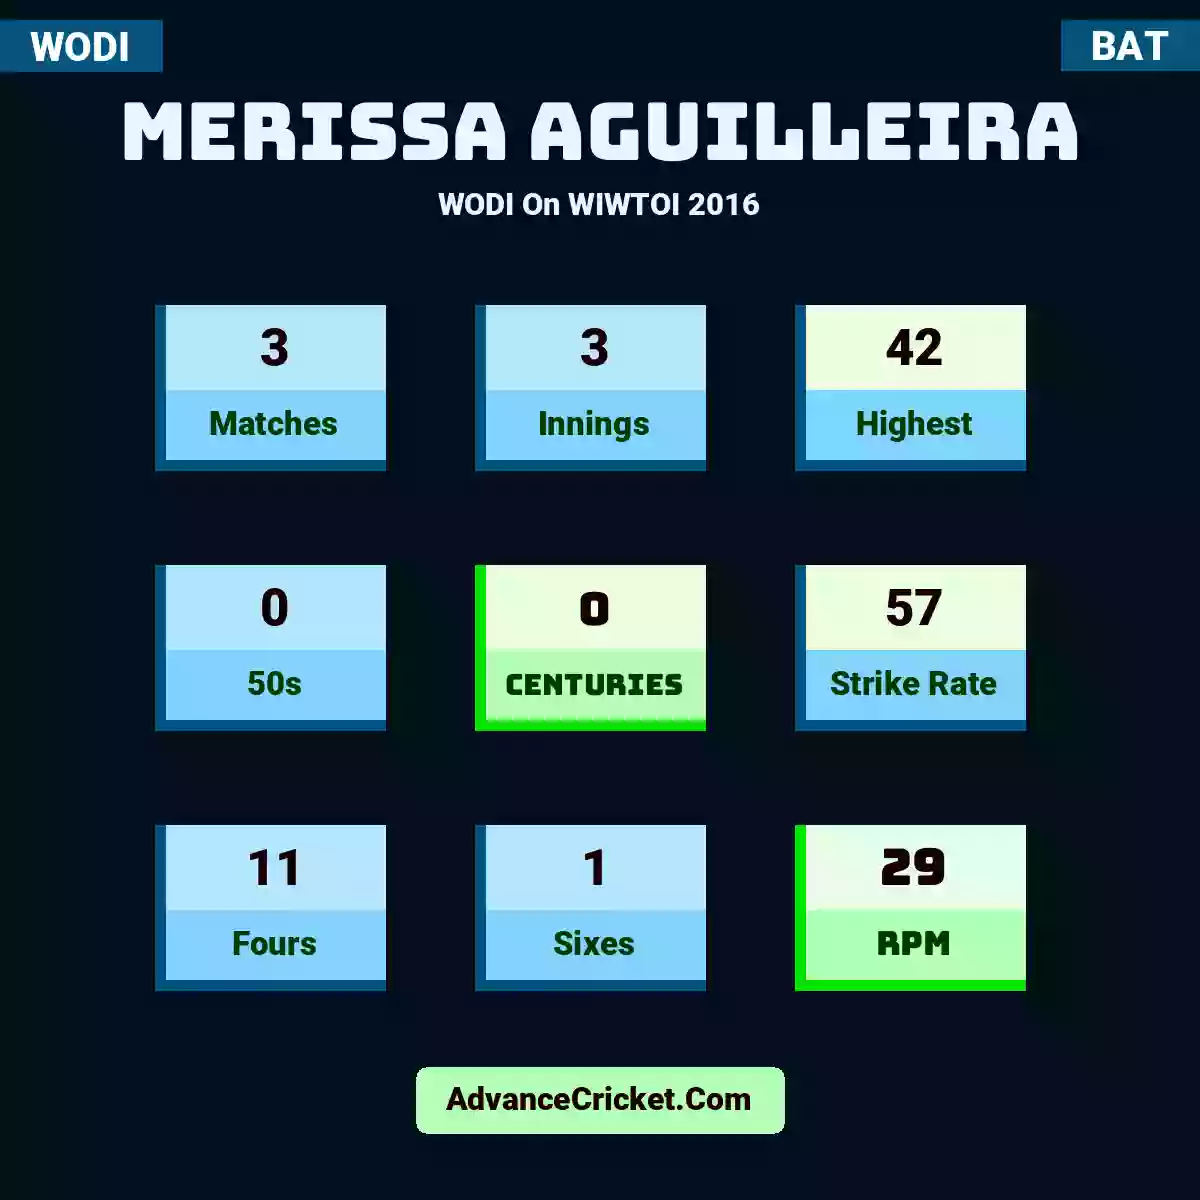 Merissa Aguilleira WODI  On WIWTOI 2016, Merissa Aguilleira played 3 matches, scored 42 runs as highest, 0 half-centuries, and 0 centuries, with a strike rate of 57. M.Aguilleira hit 11 fours and 1 sixes, with an RPM of 29.